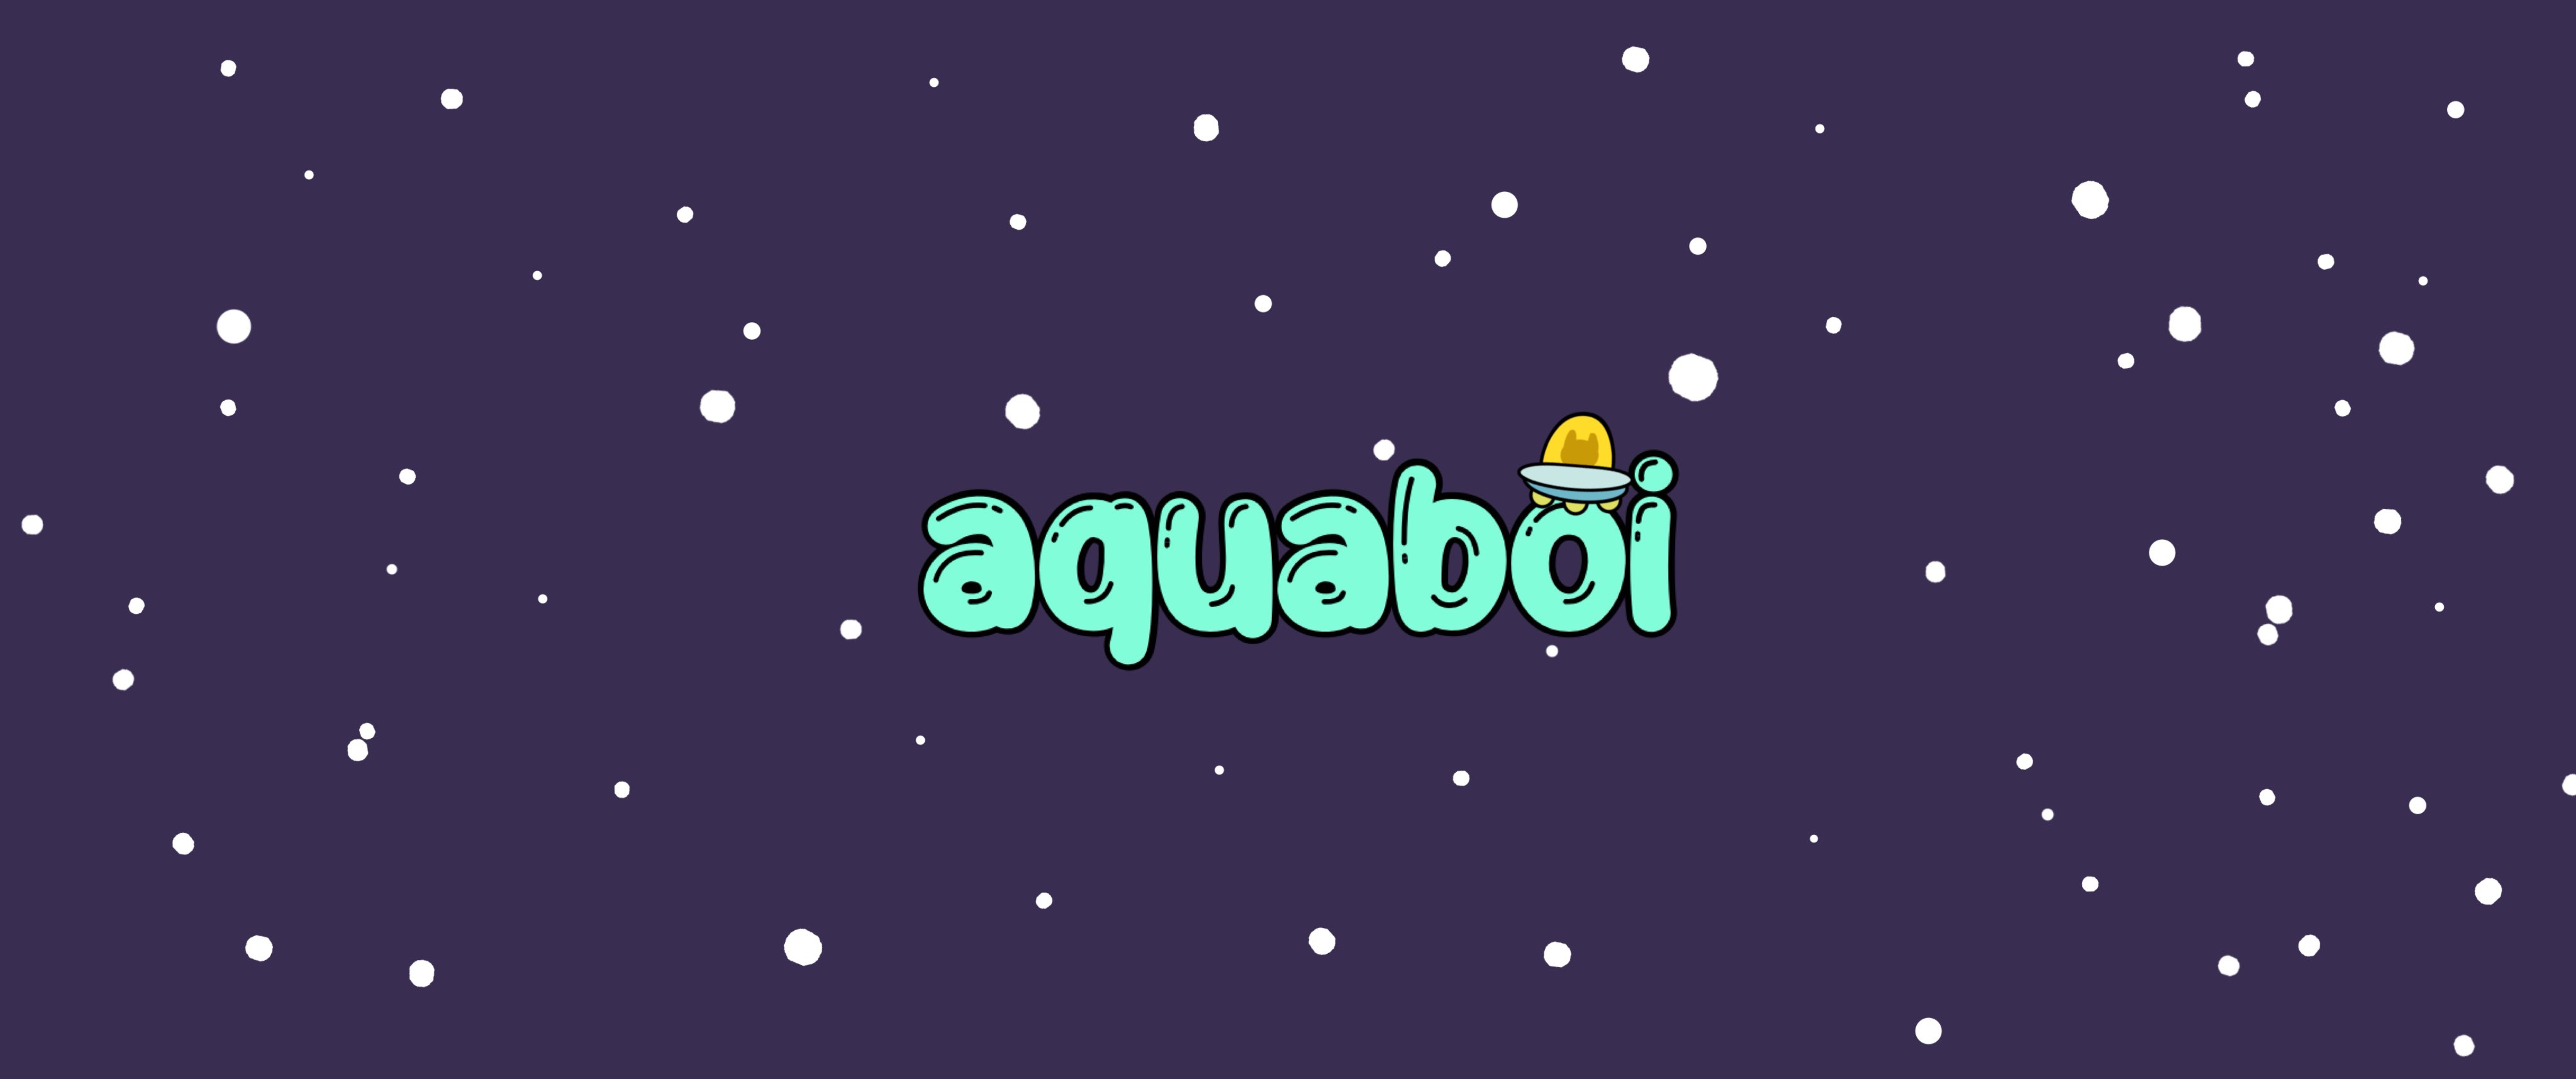 Aquaboi バナー